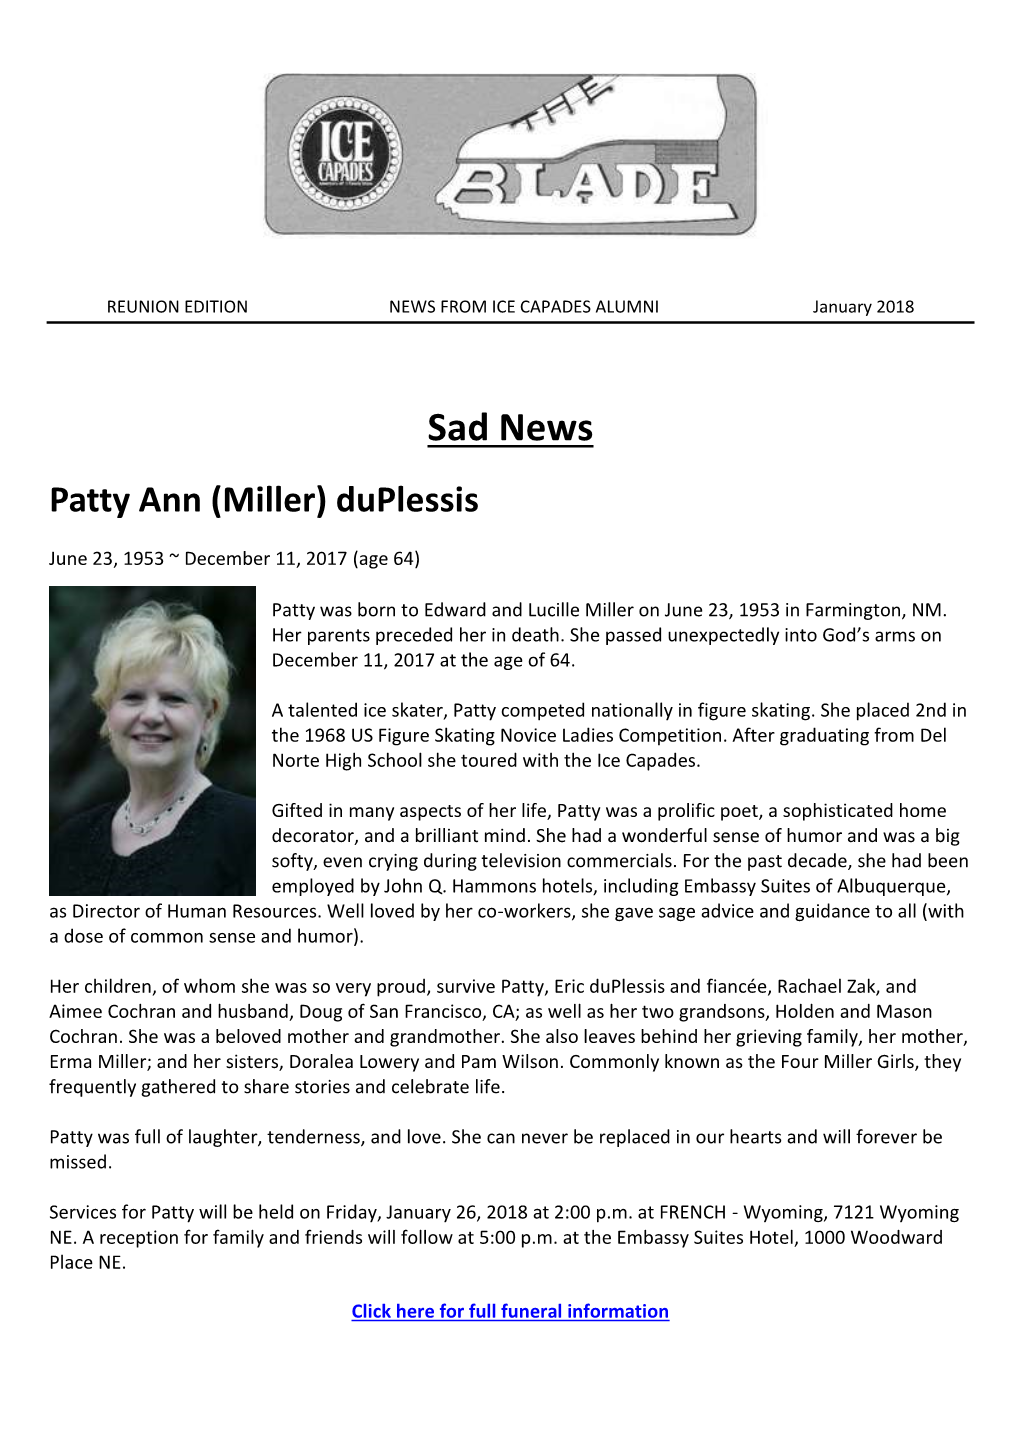 Sad News Patty Ann (Miller) Duplessis